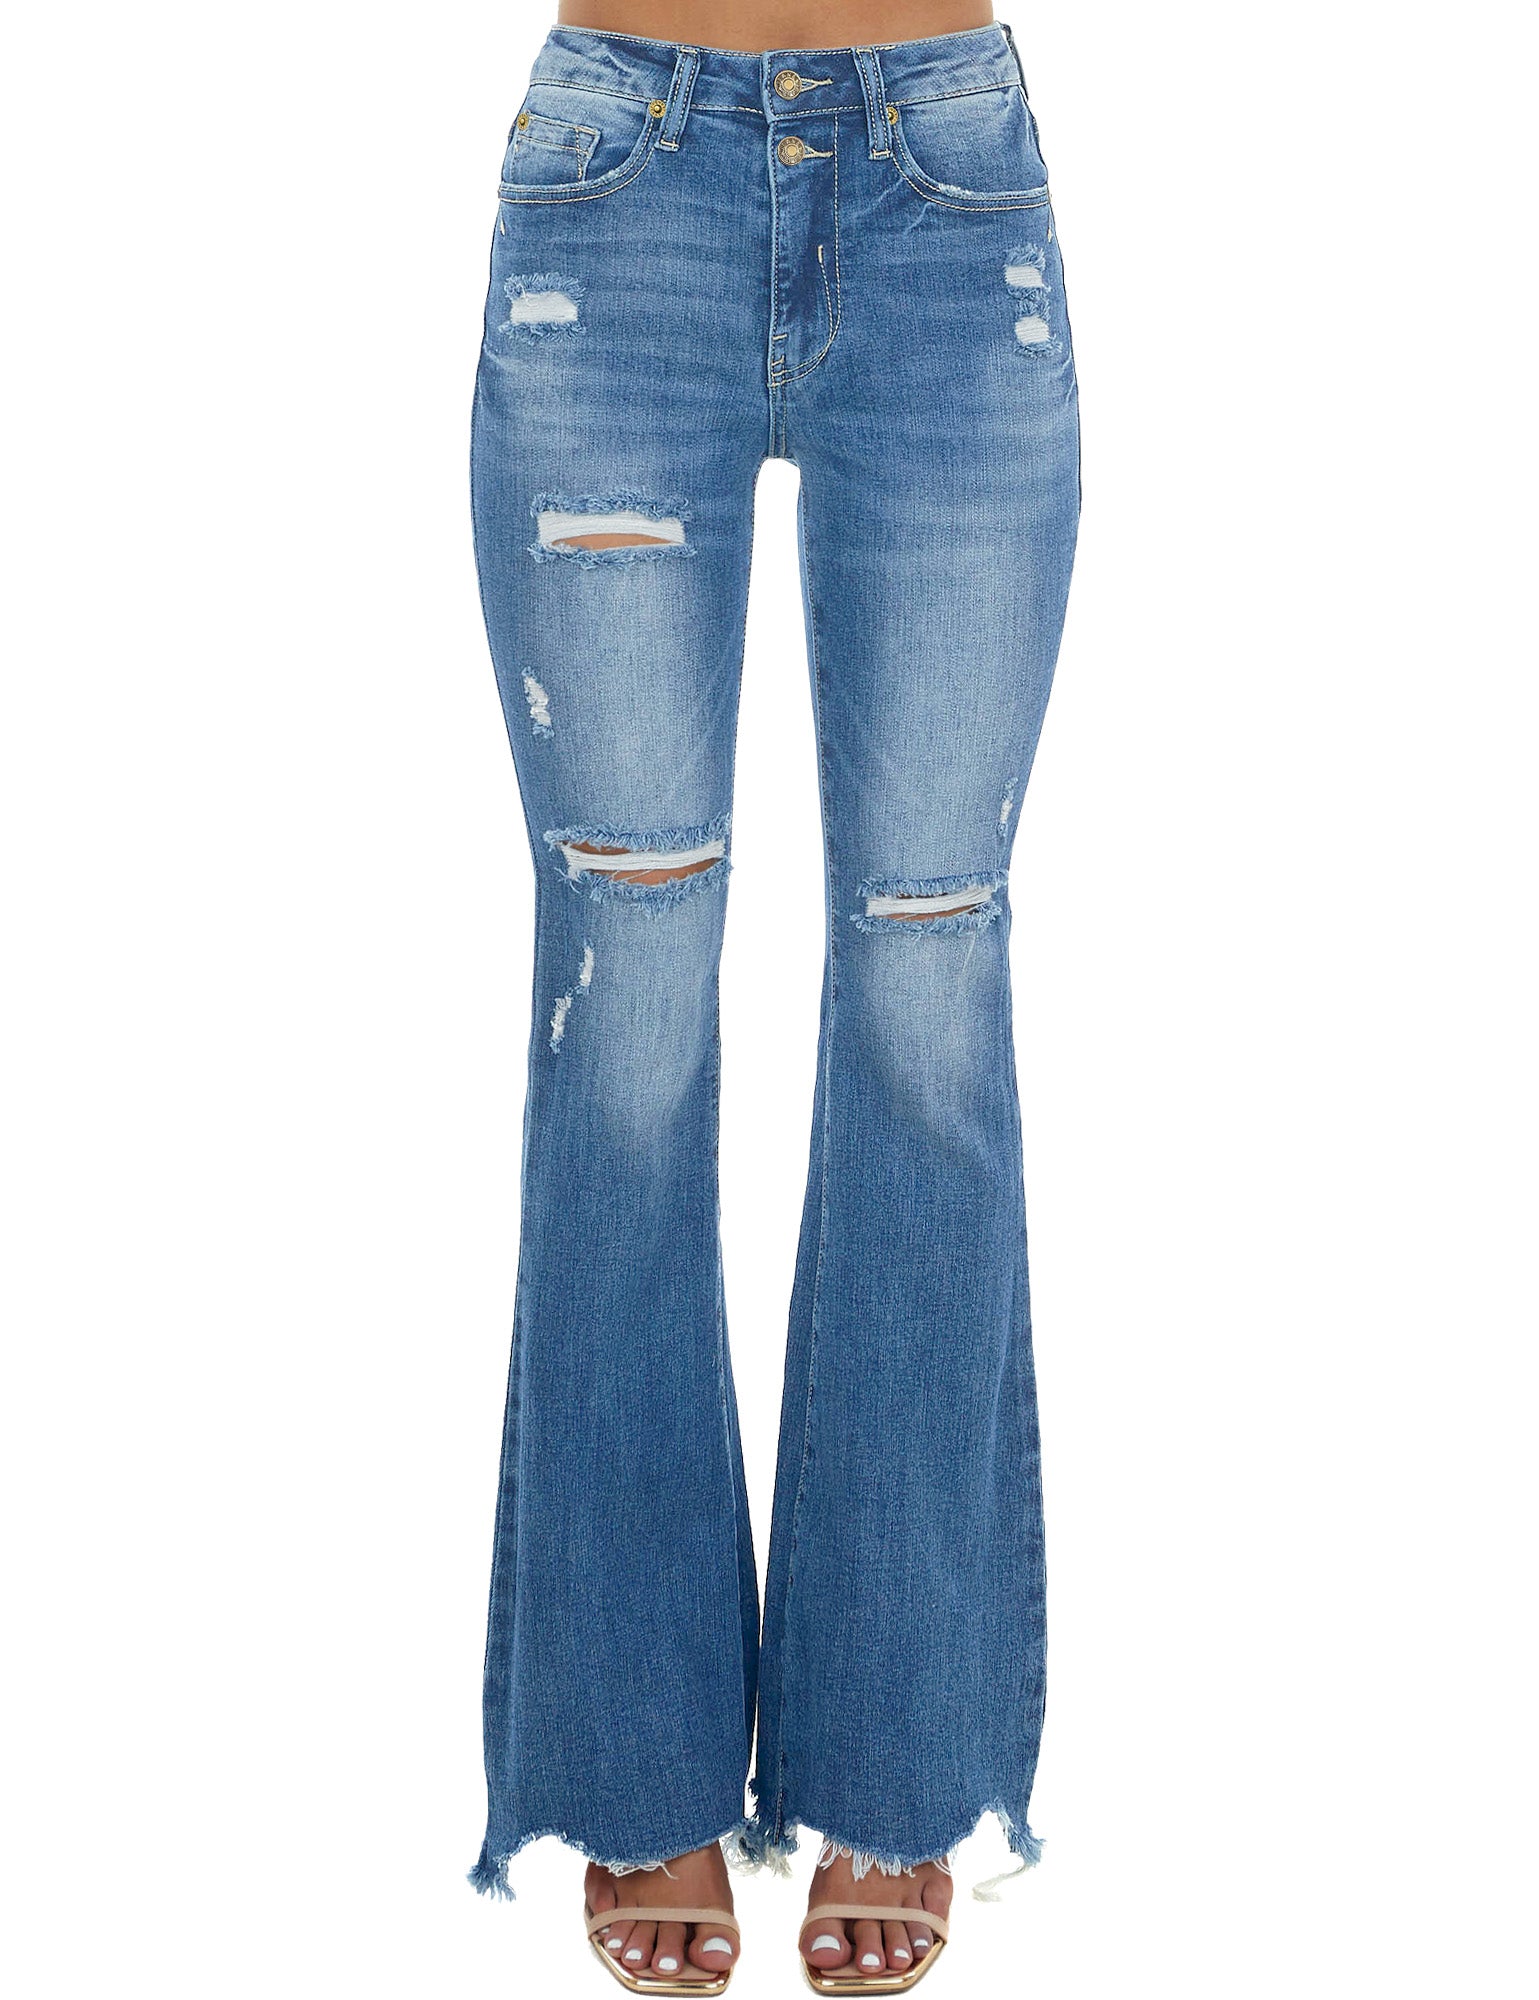 LookbookStore Flare Jeans for Women Distressed Bell Bottom High Waiste ...